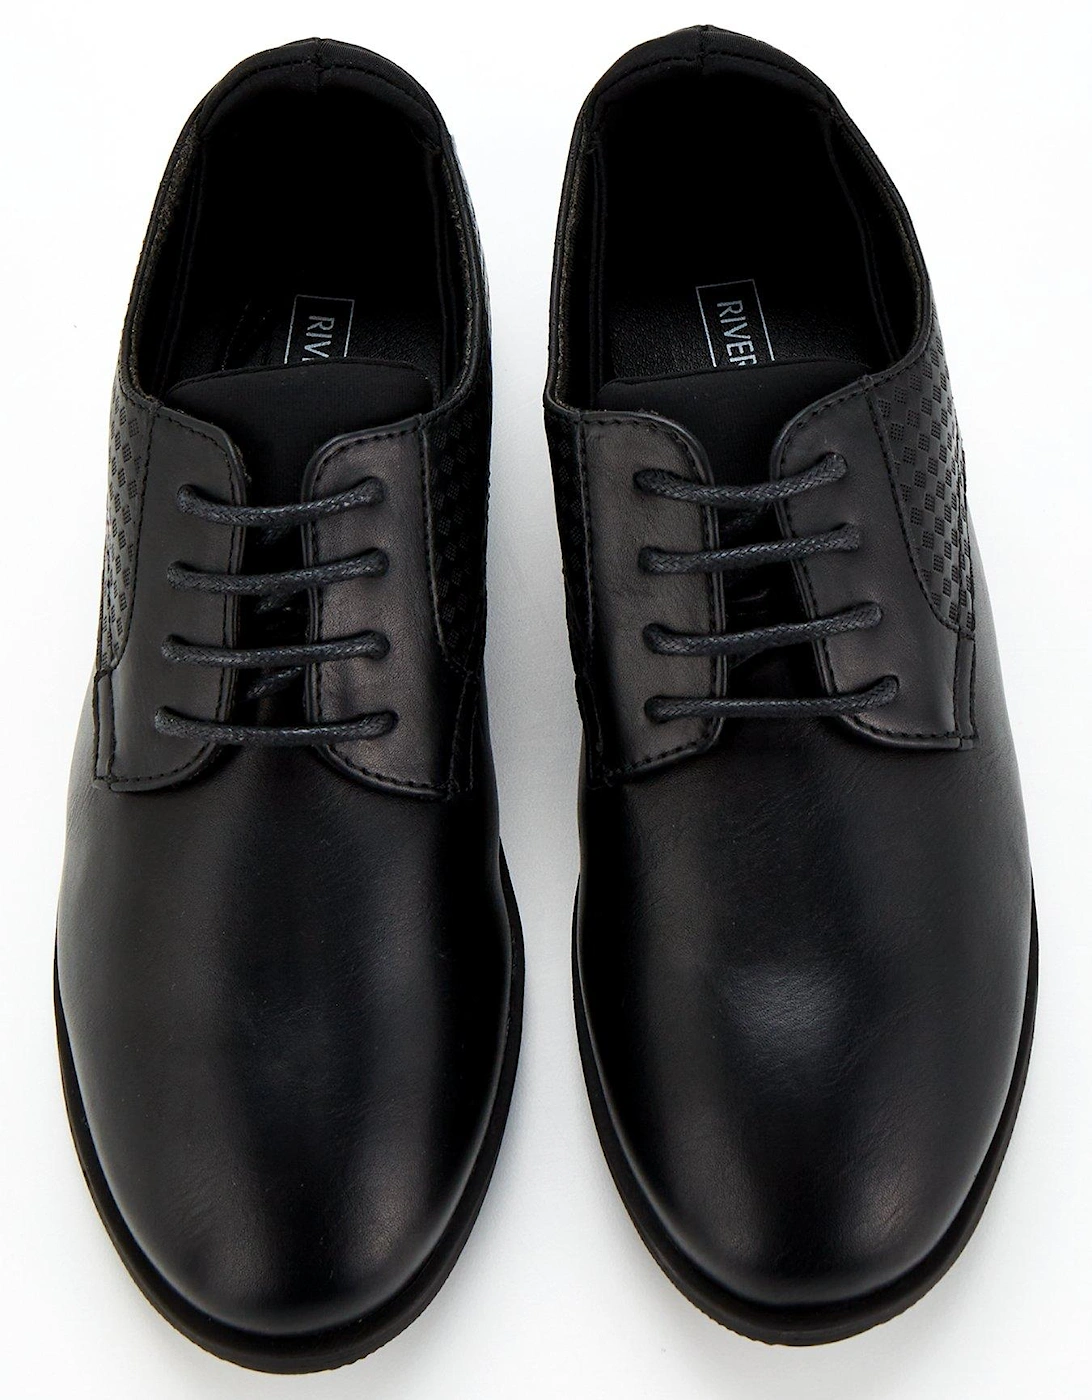 Boys Embossed Shoes - Black